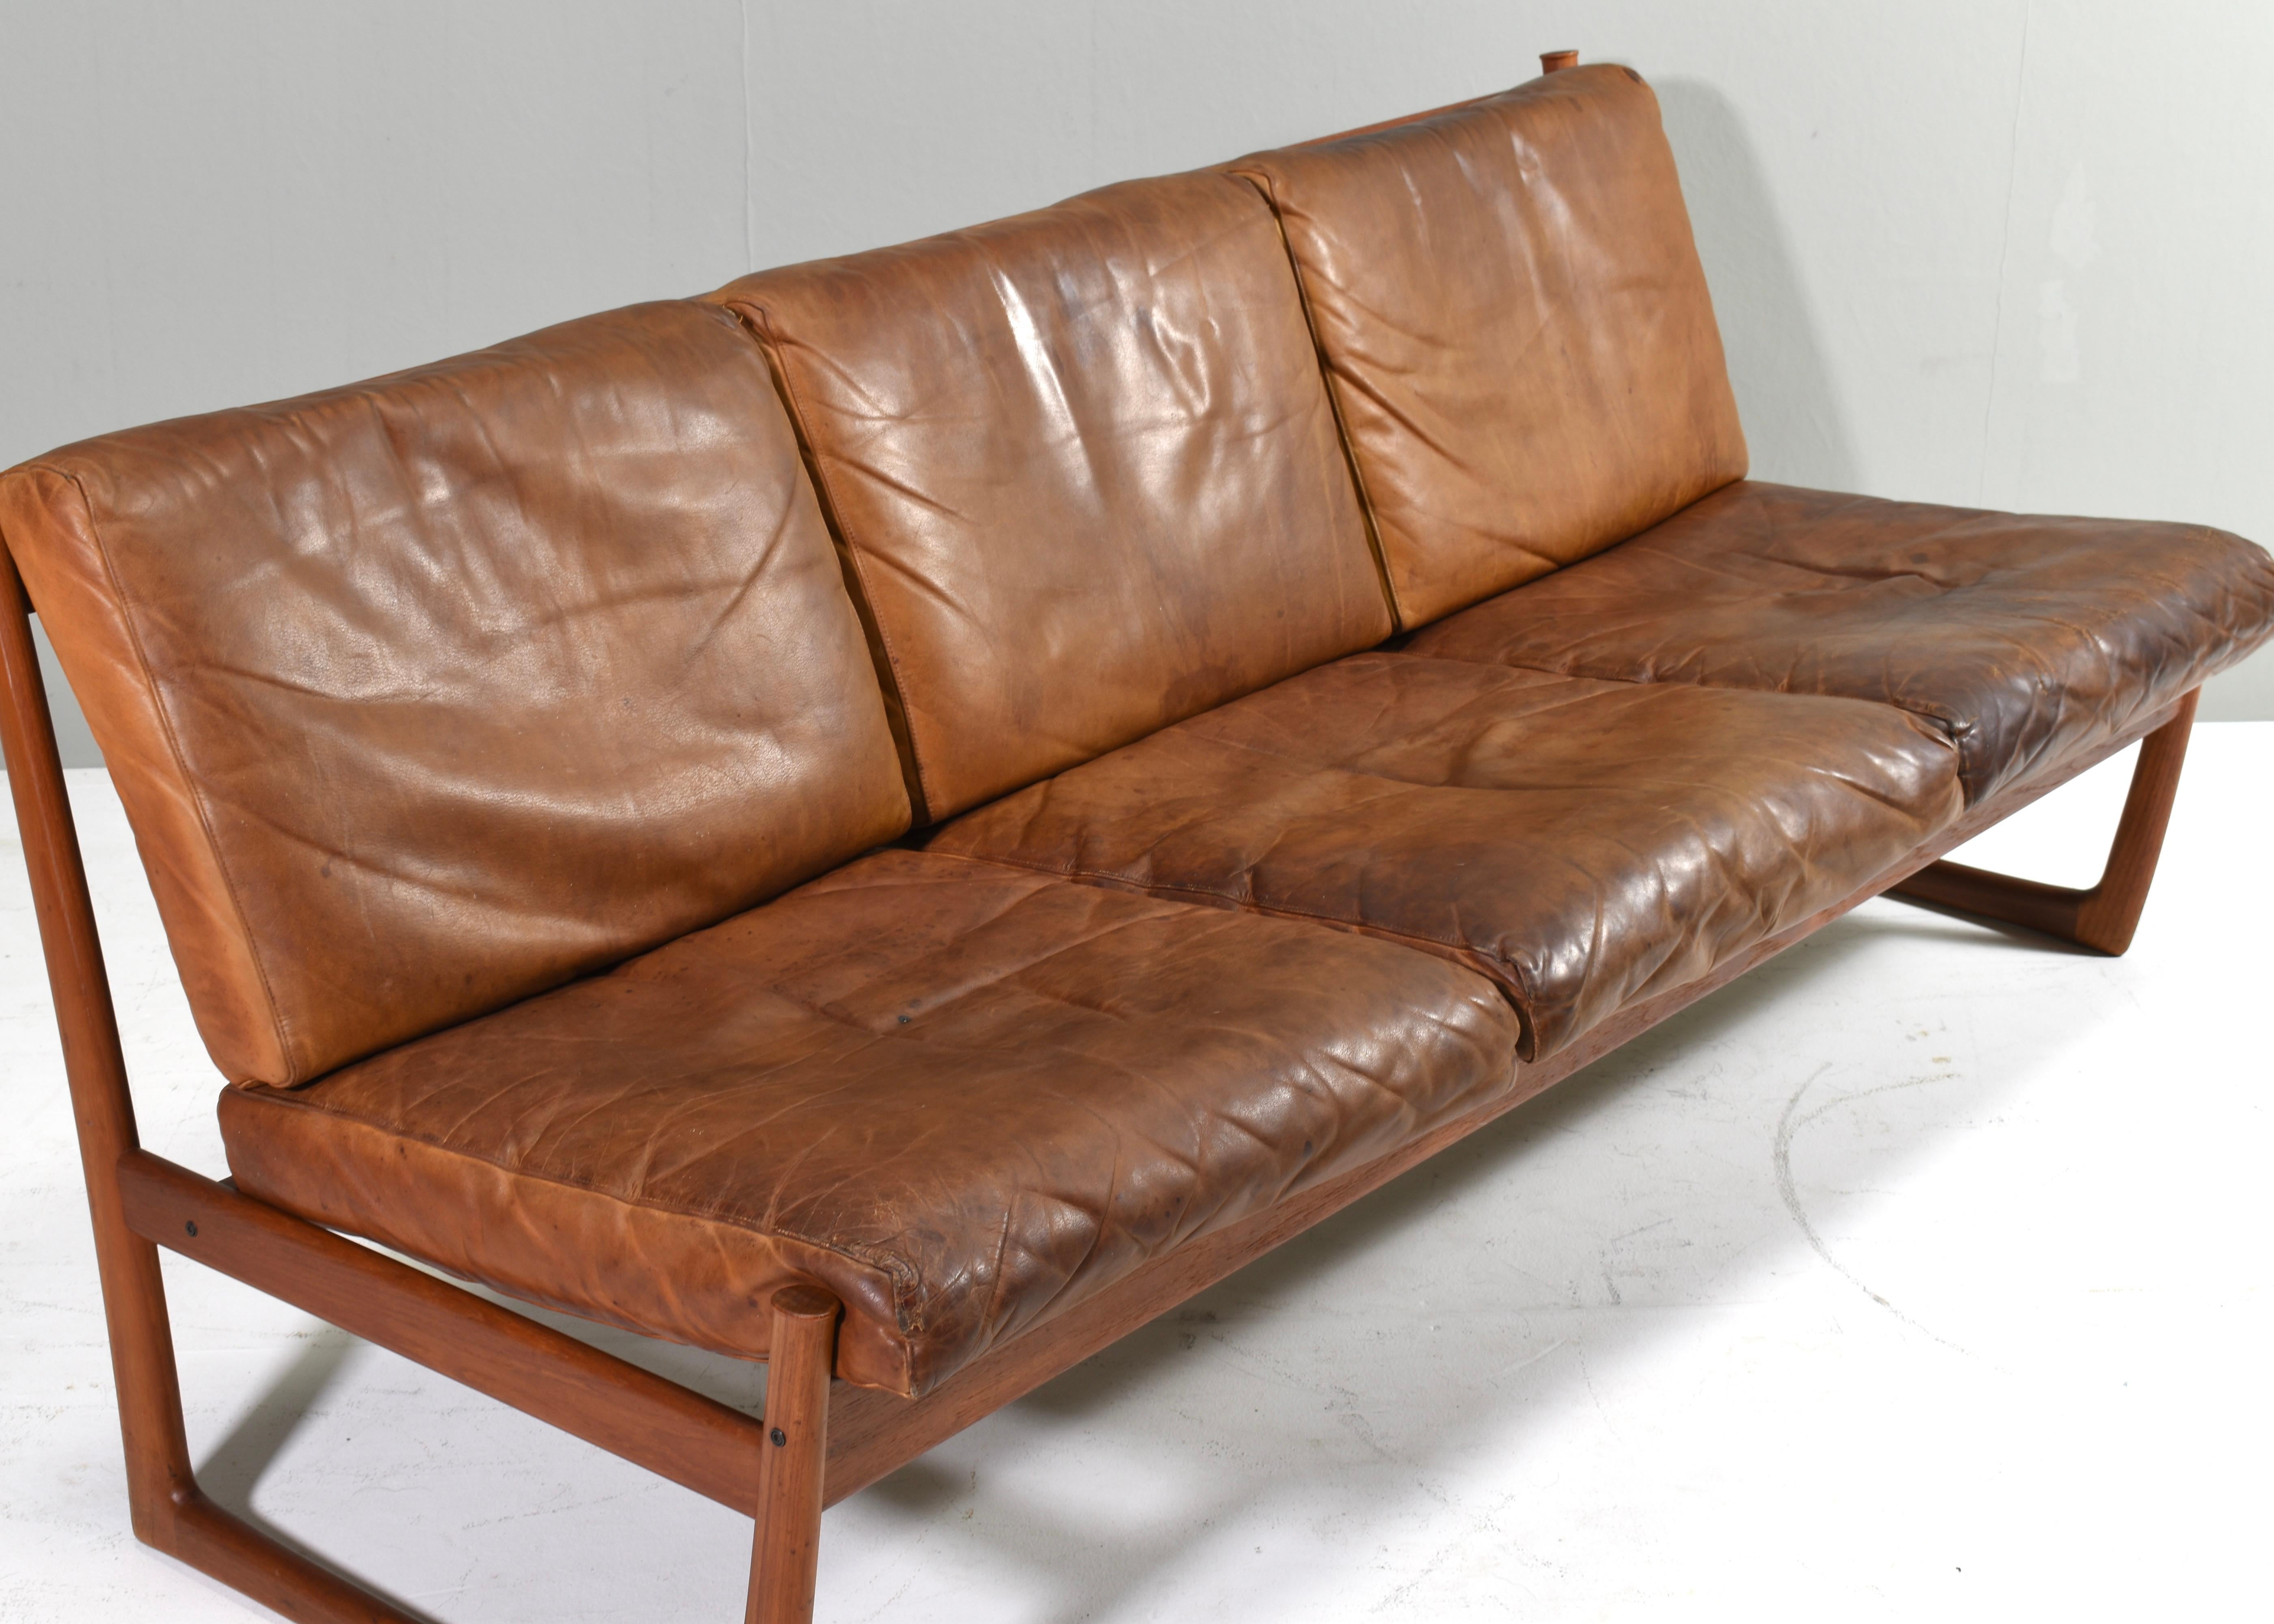 Peter Hvidt & Orla Mølgaard FD130 Teak sofa in Cognac Leather - Denmark, 1950's For Sale 2